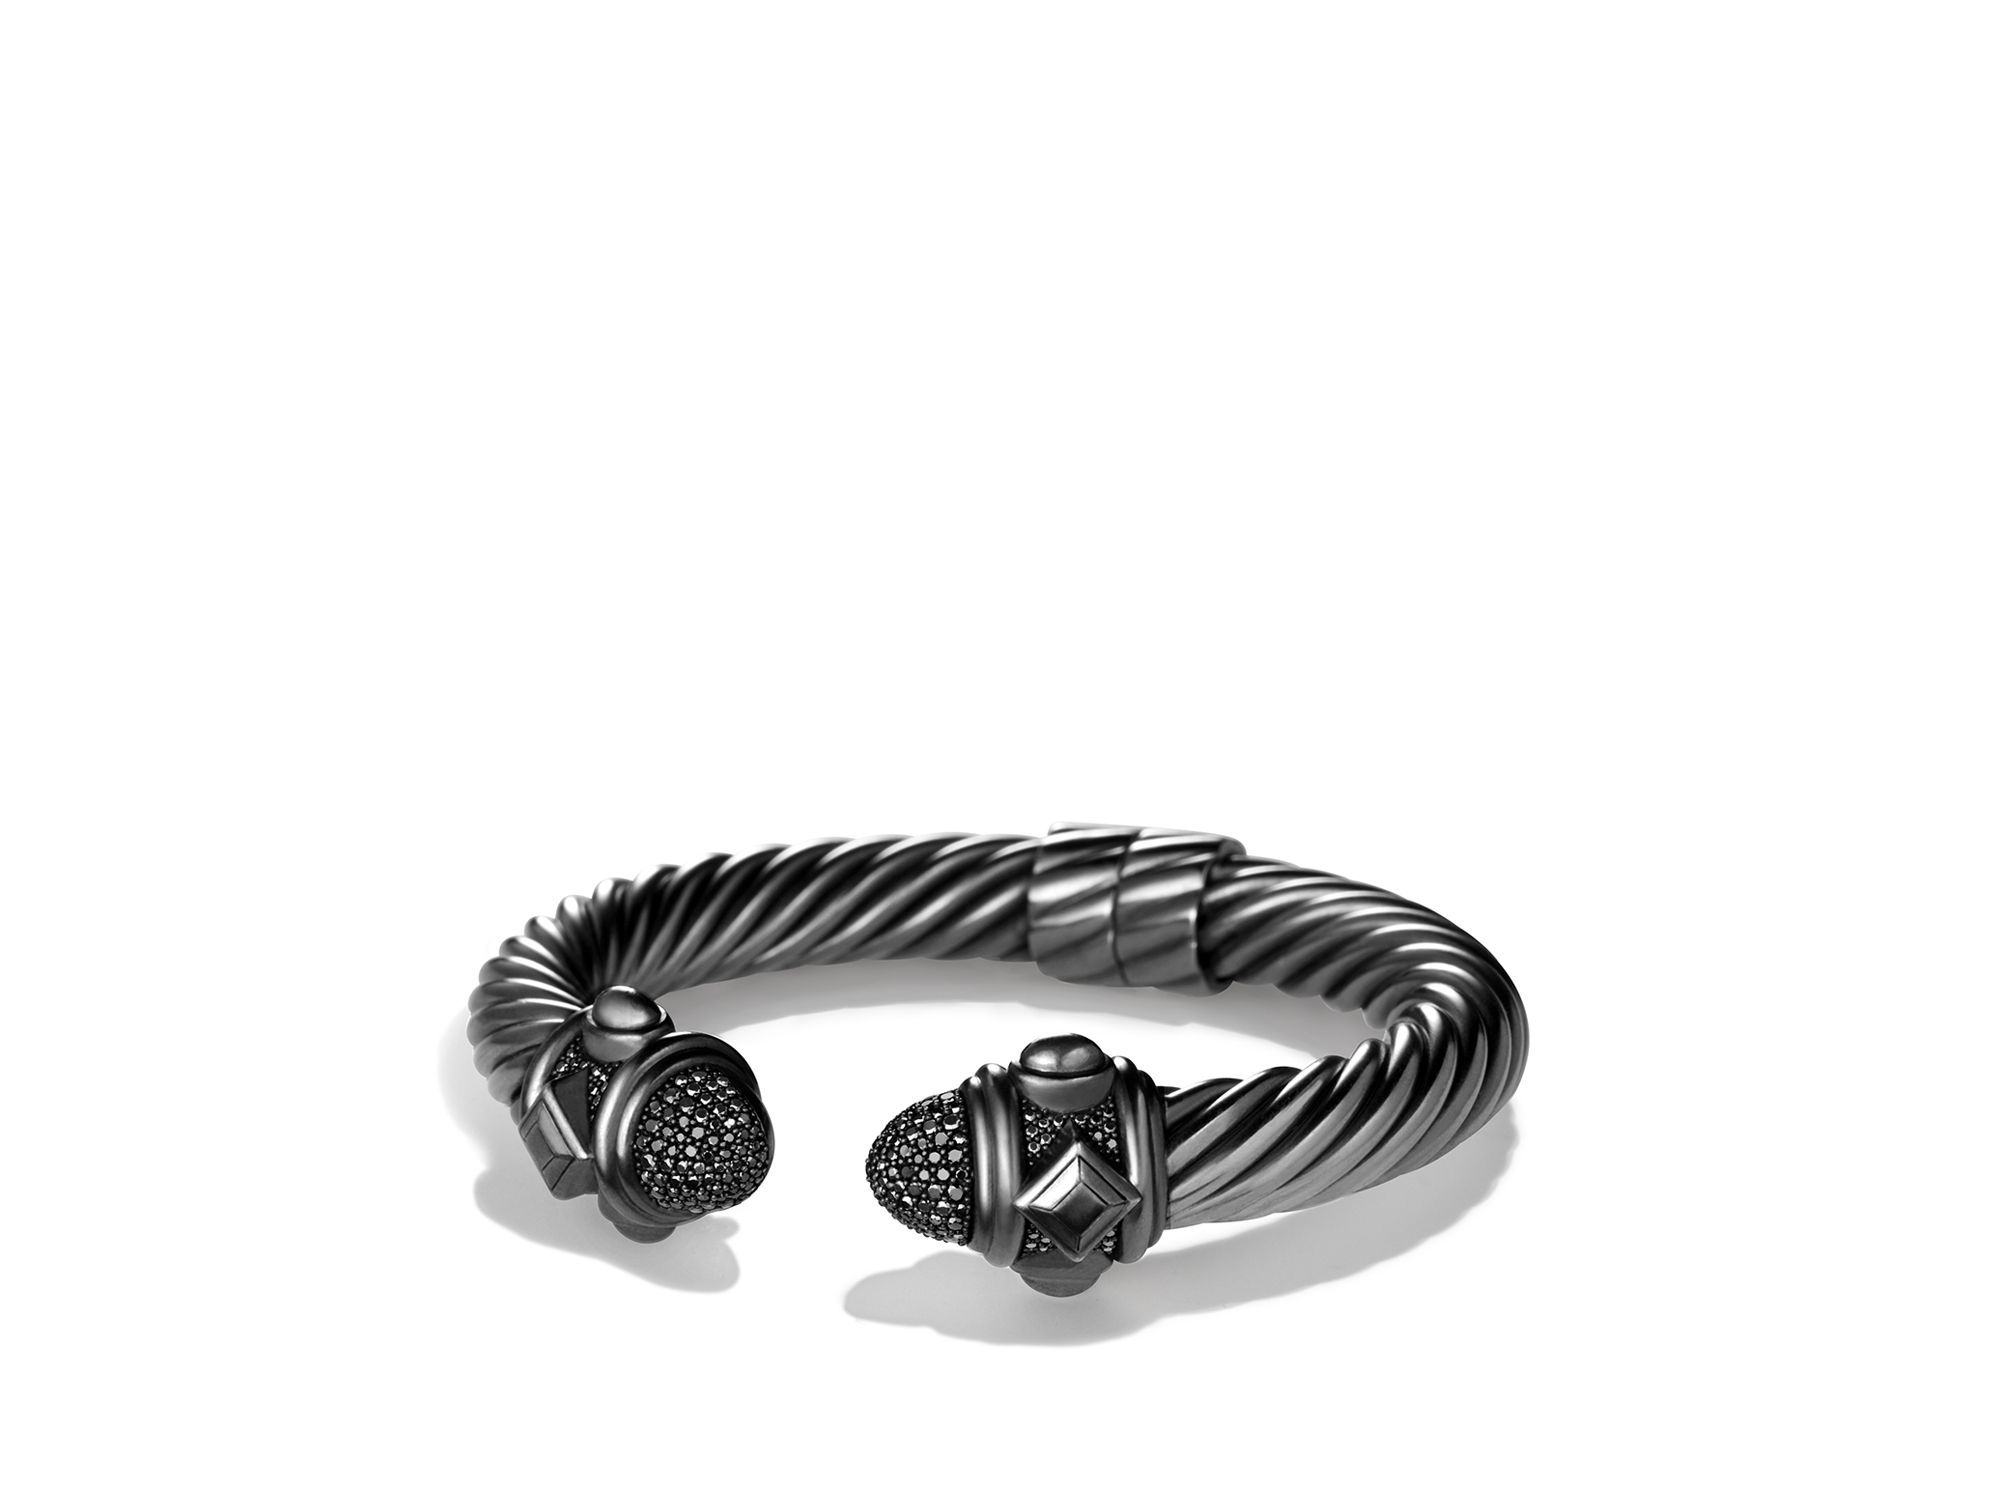 Lyst - David Yurman Renaissance Bracelet With Black Diamonds in Black